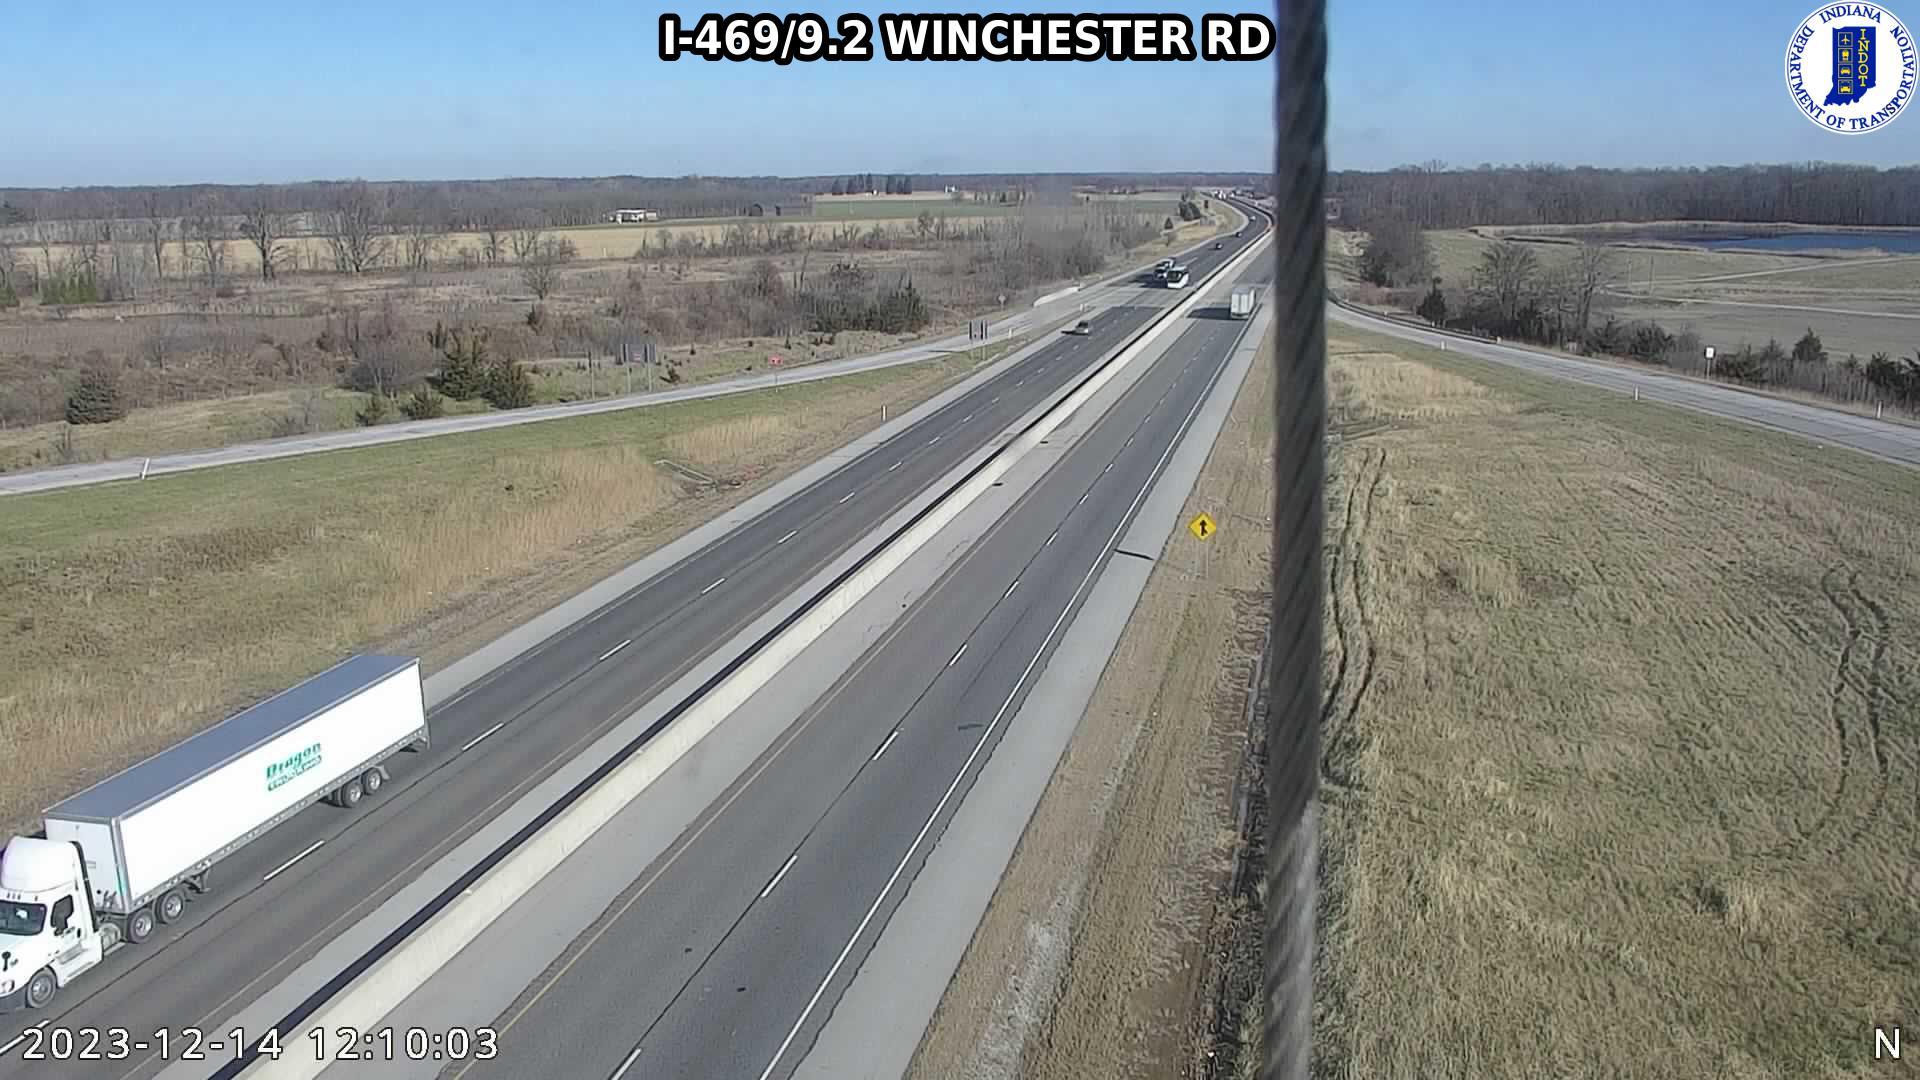 Traffic Cam Hessen Cassel: I-469: I-469/9.2 WINCHESTER RD Player